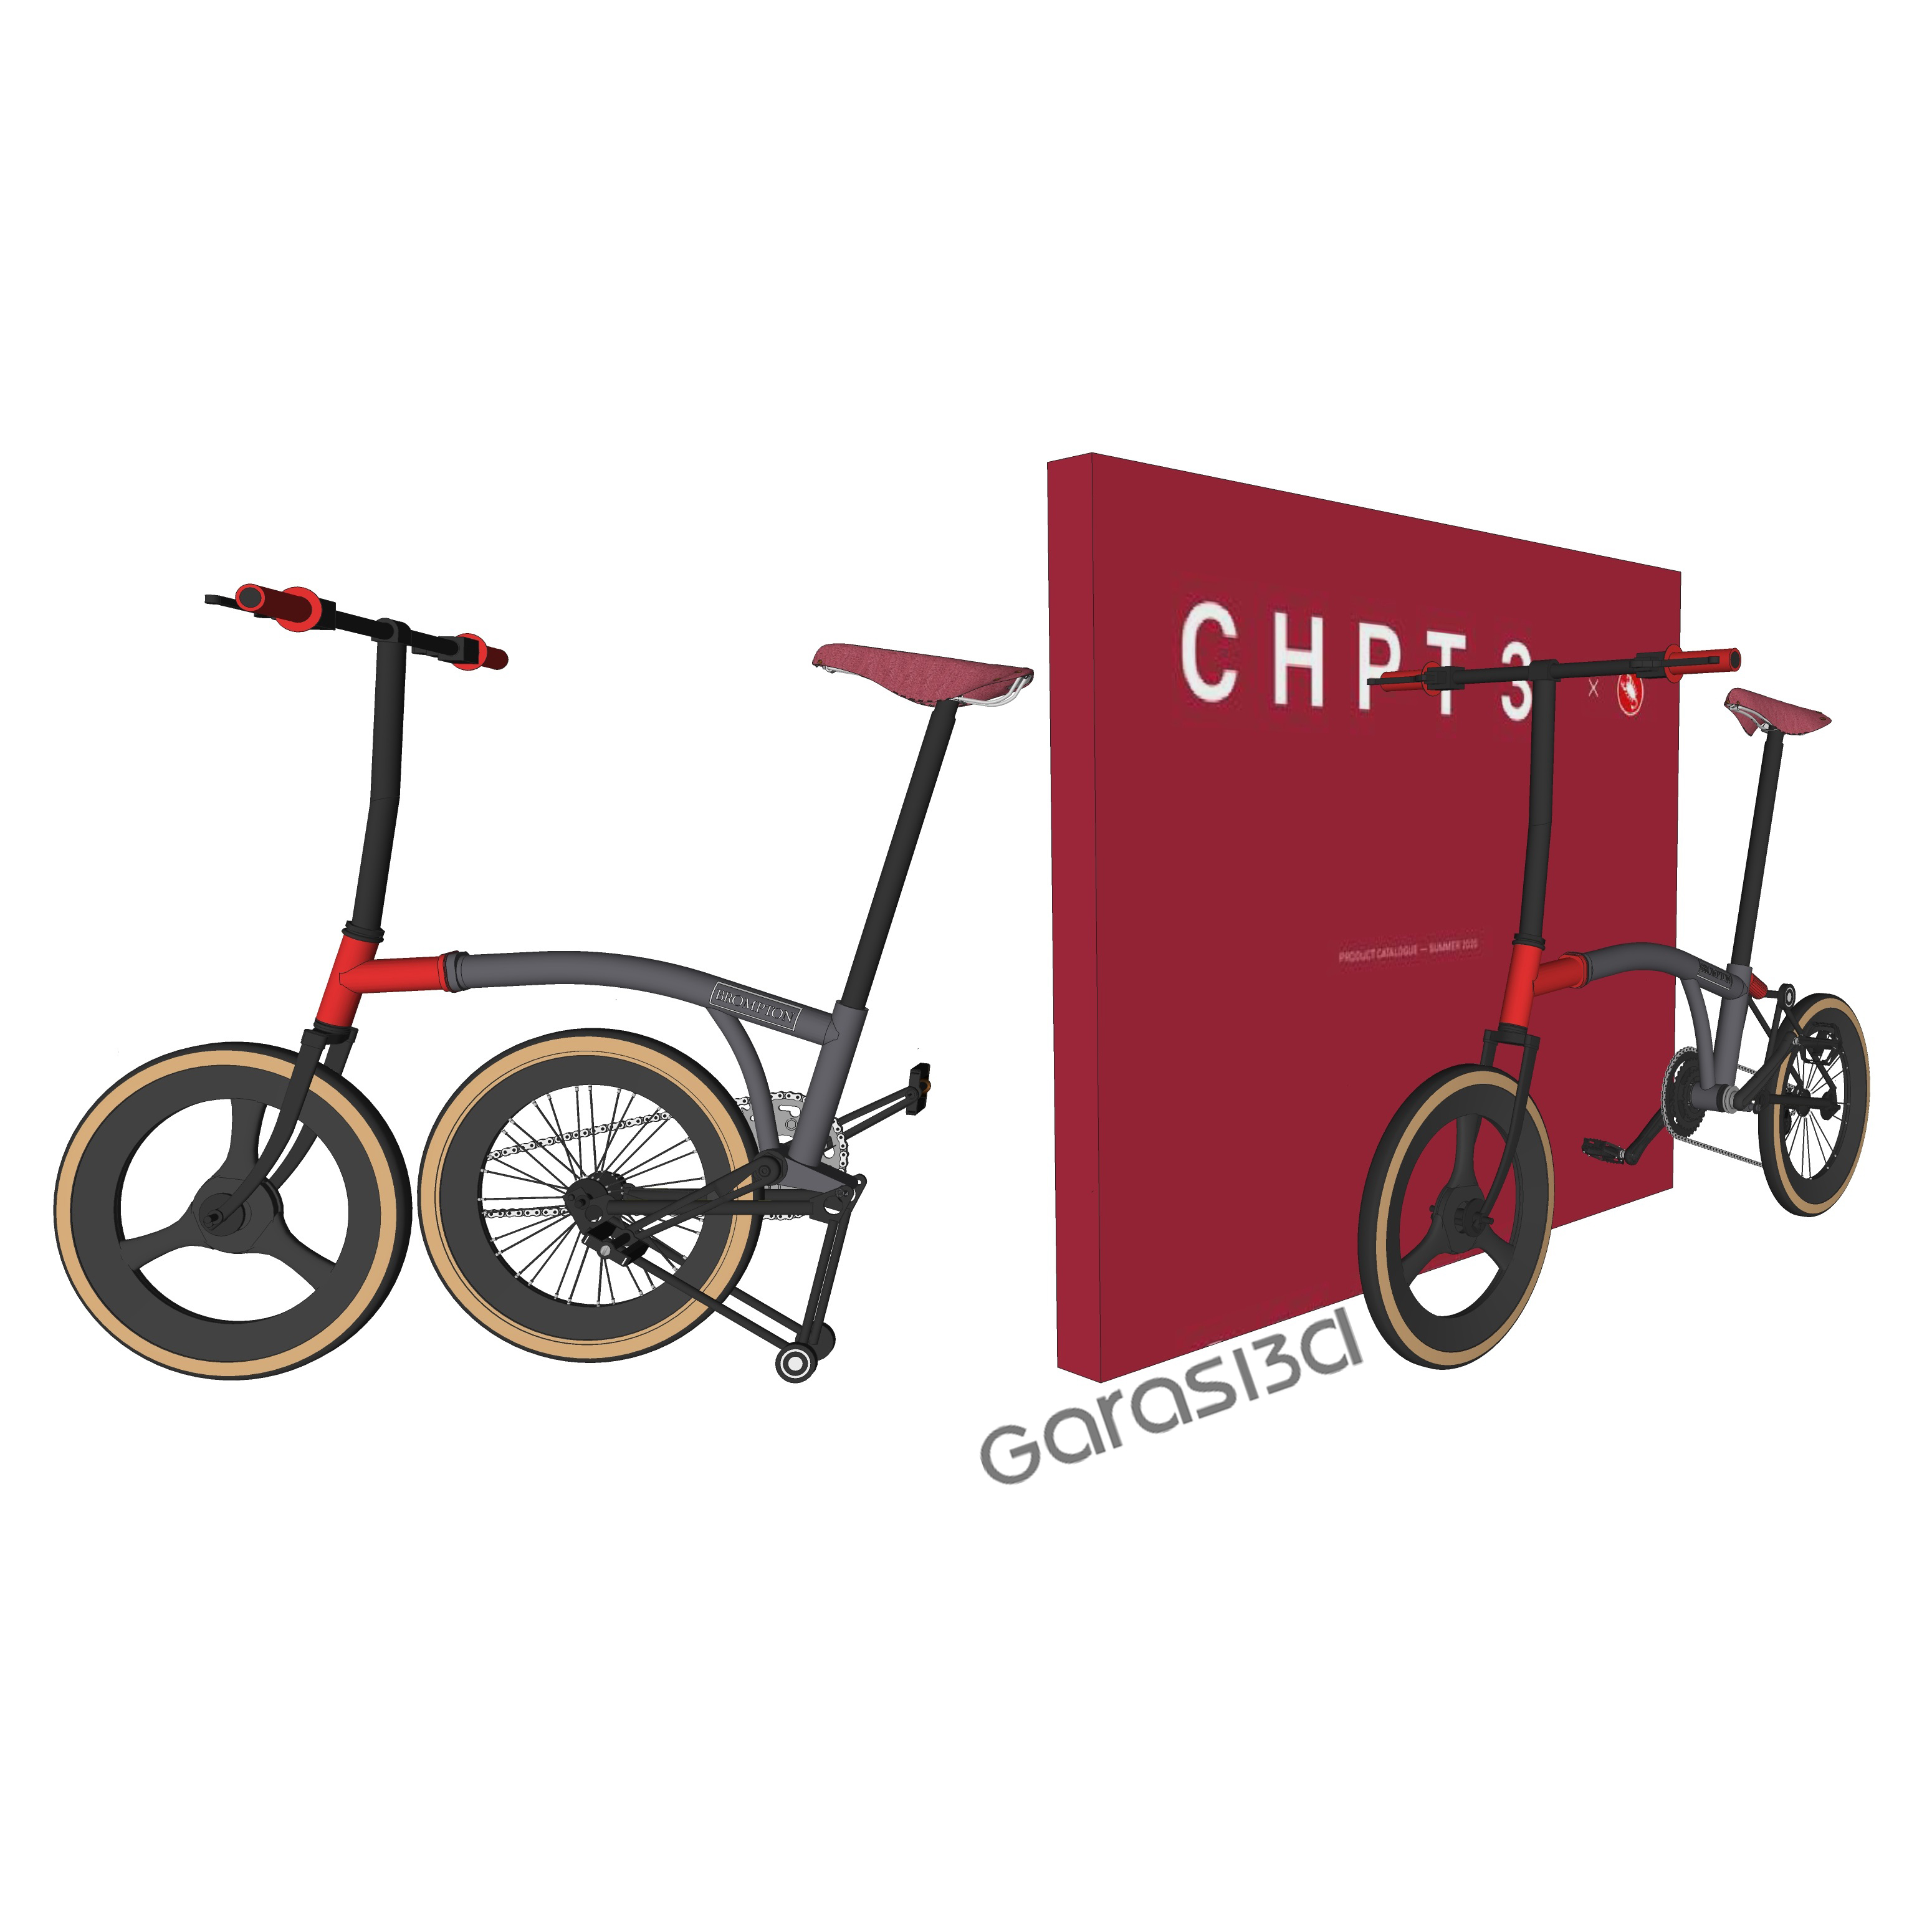 Brompton_CHPT3 Folding bike